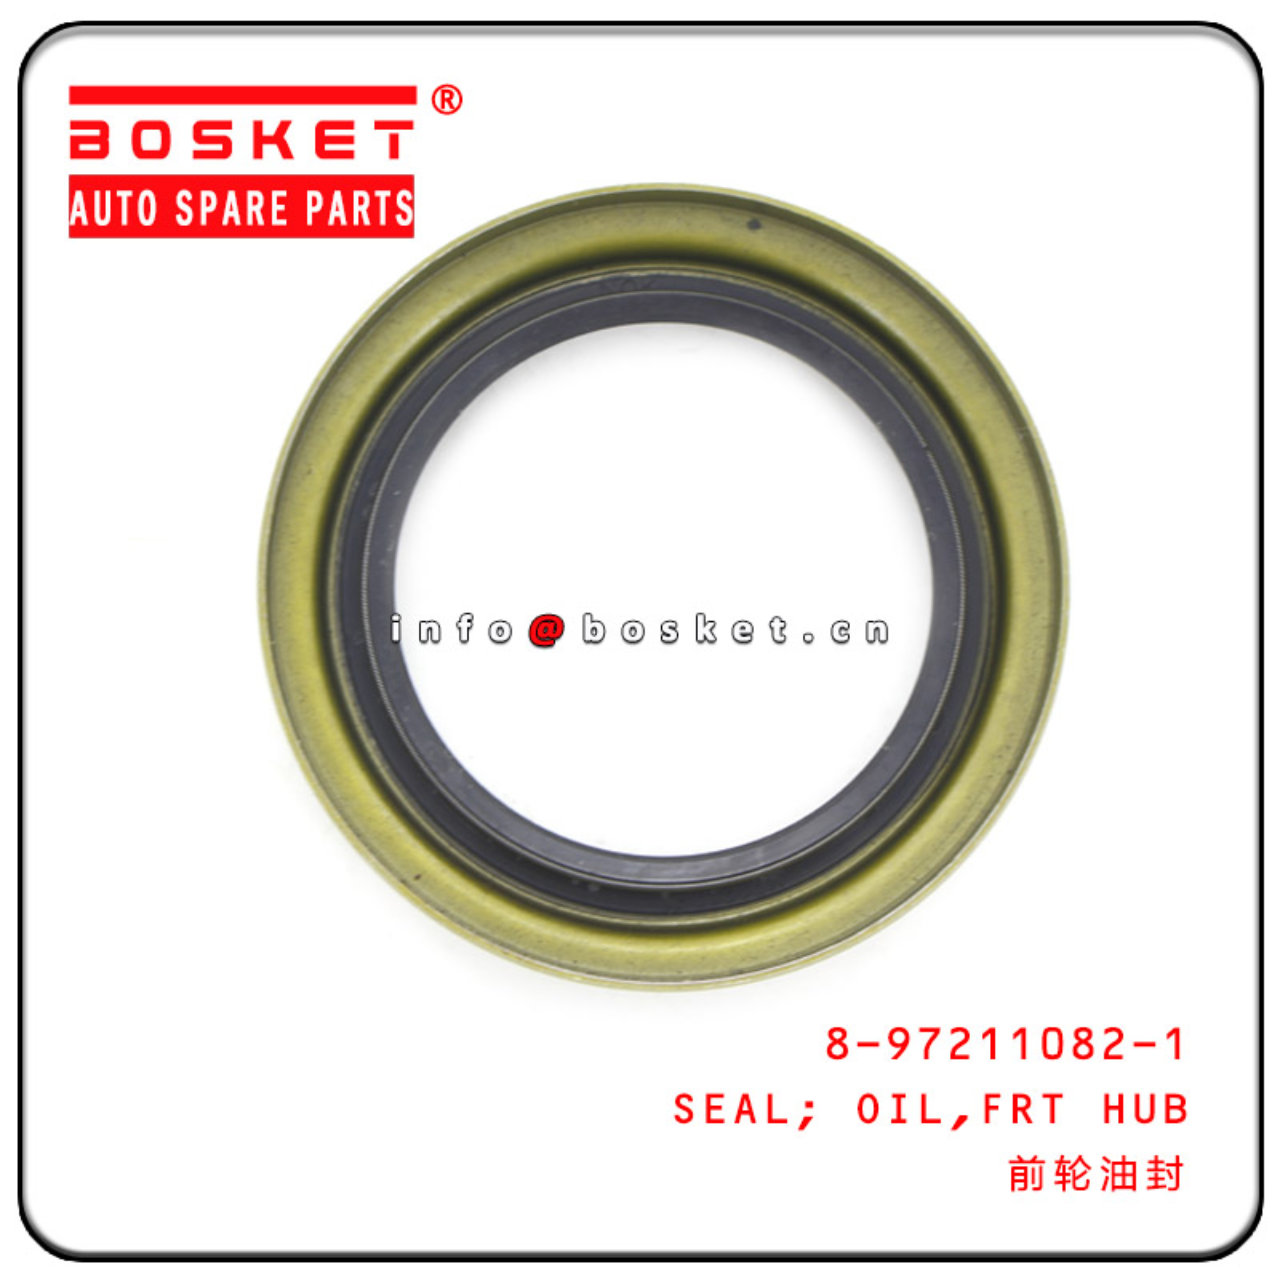 8-97211082-1 8972110821 Front Hub Oil Seal Suitable For ISUZU 4JB1 NHR NKR8-97211082-1 8972110821 Fr